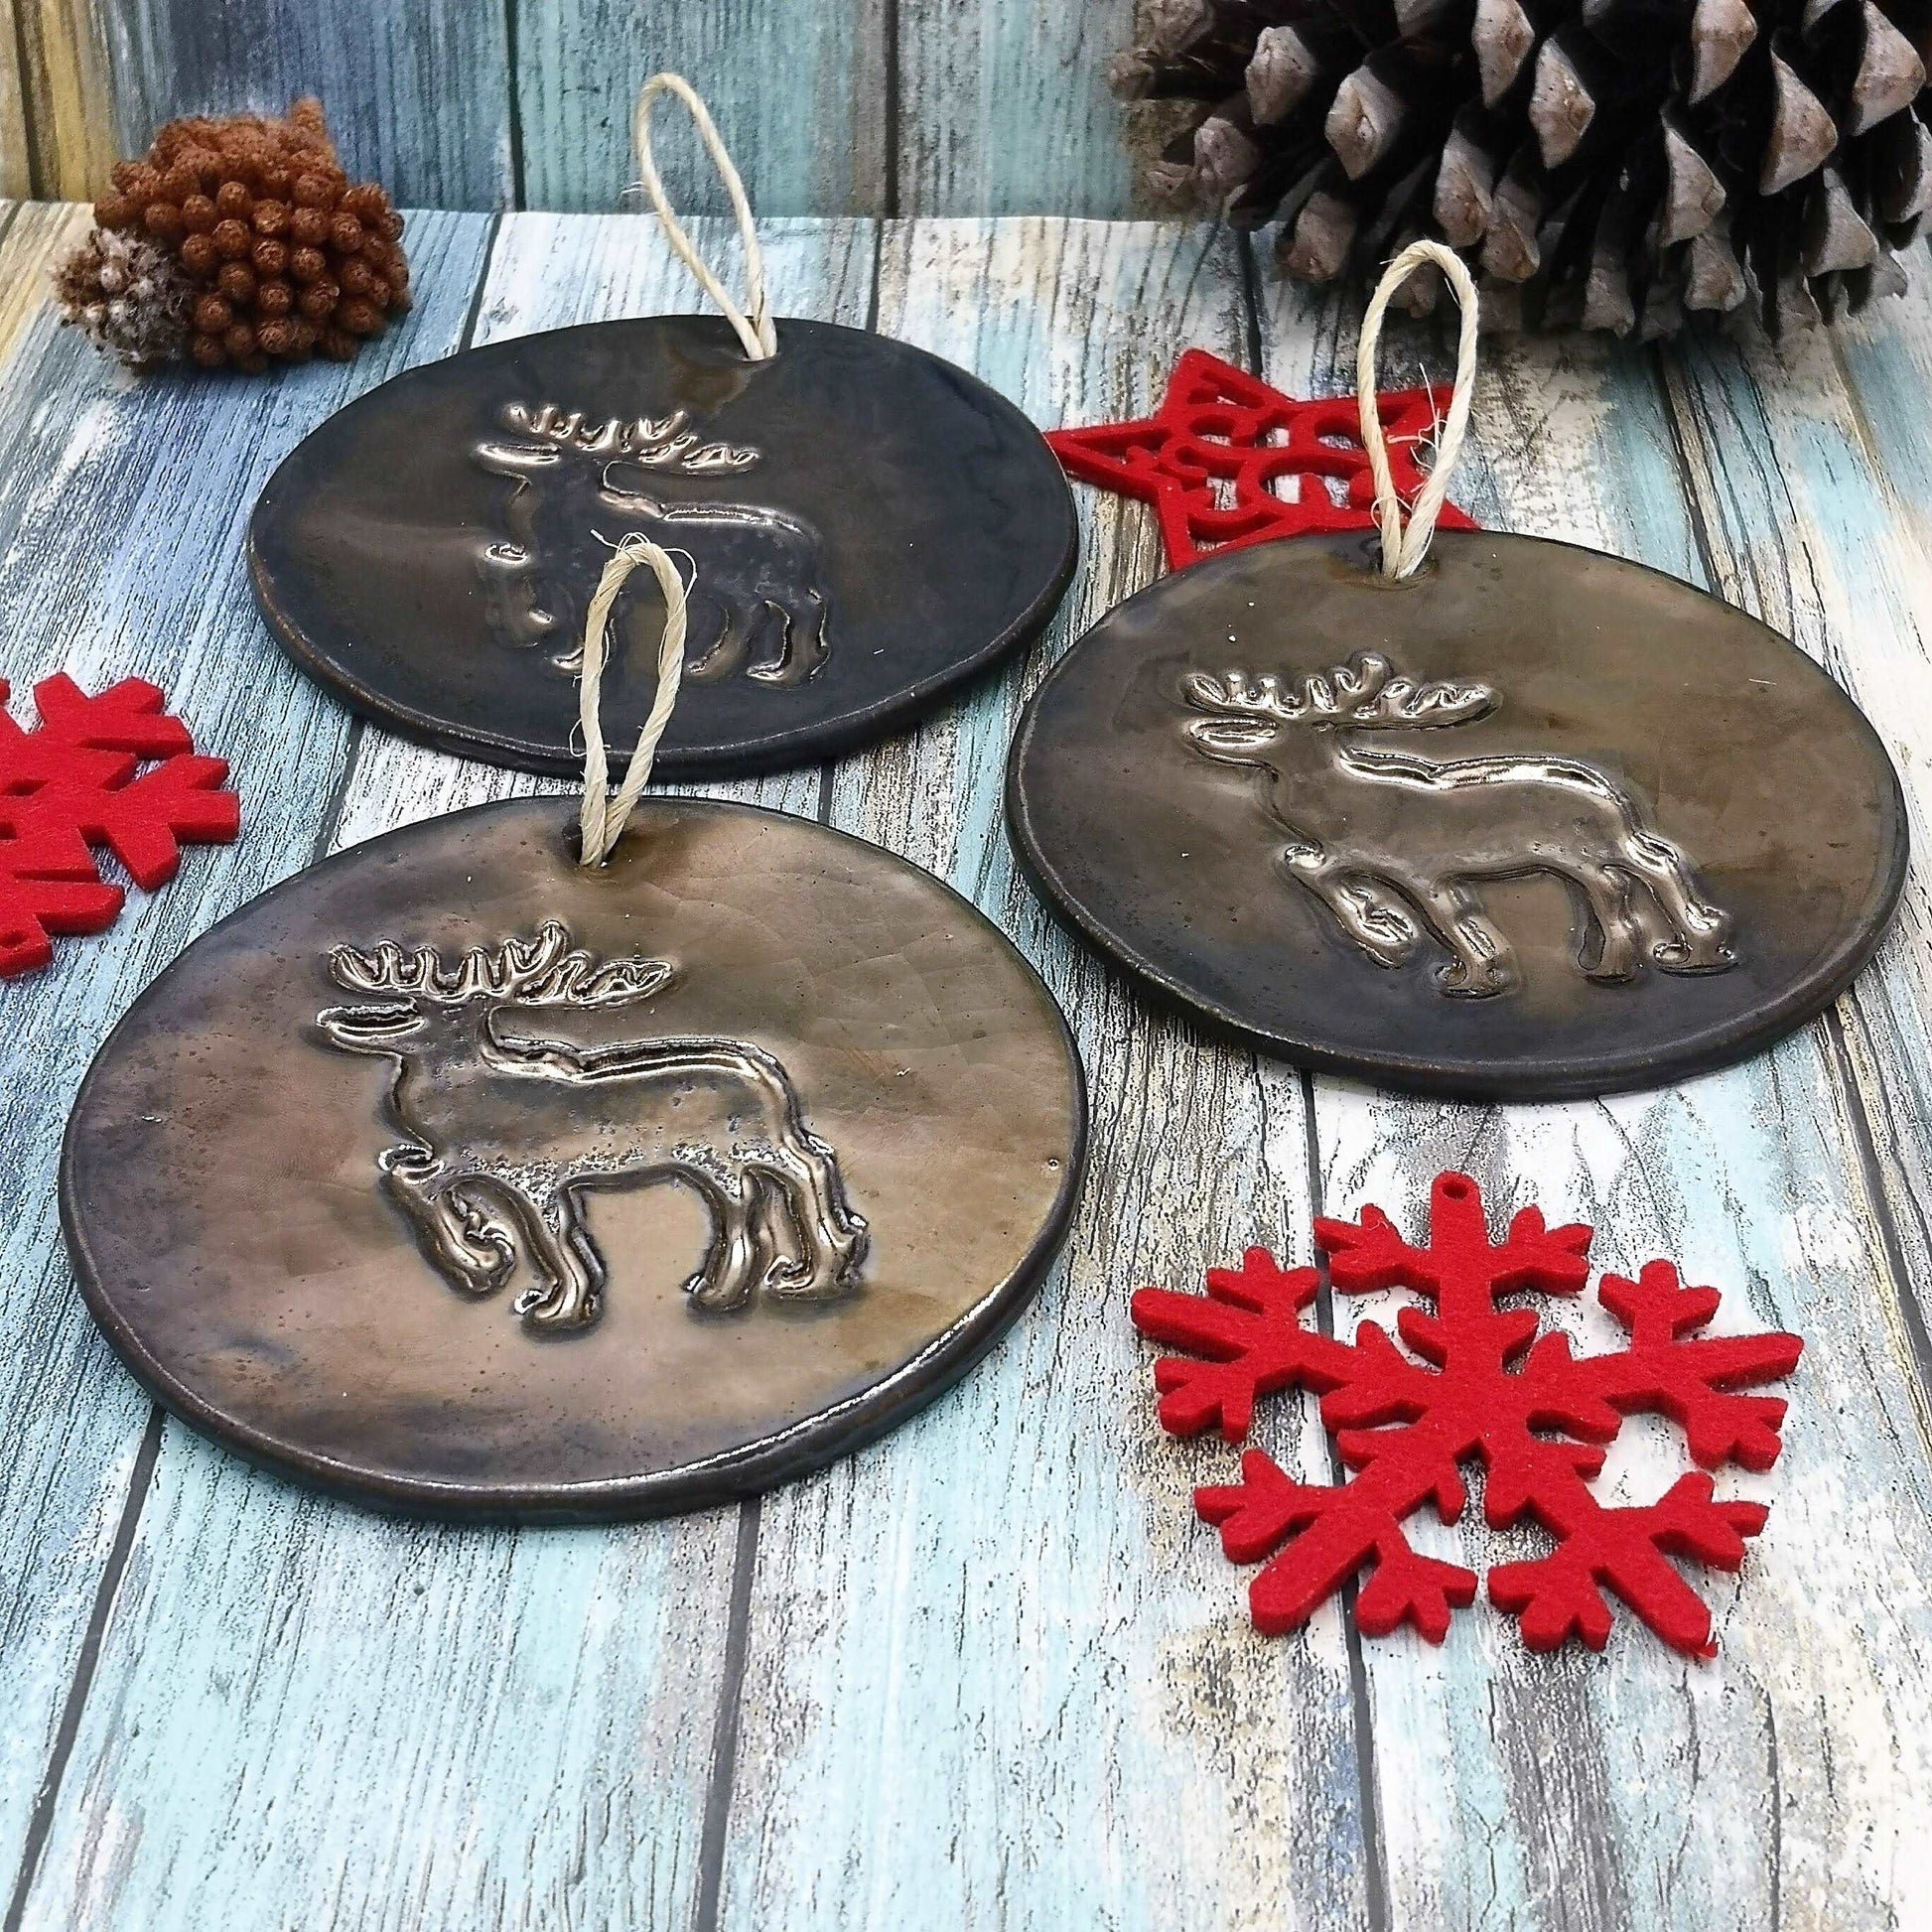 1Pc Golden Handmade Ceramic Reindeer Ornament, Christmas Tree Decoration, Antique Looking Winter Wall Hanging Decor